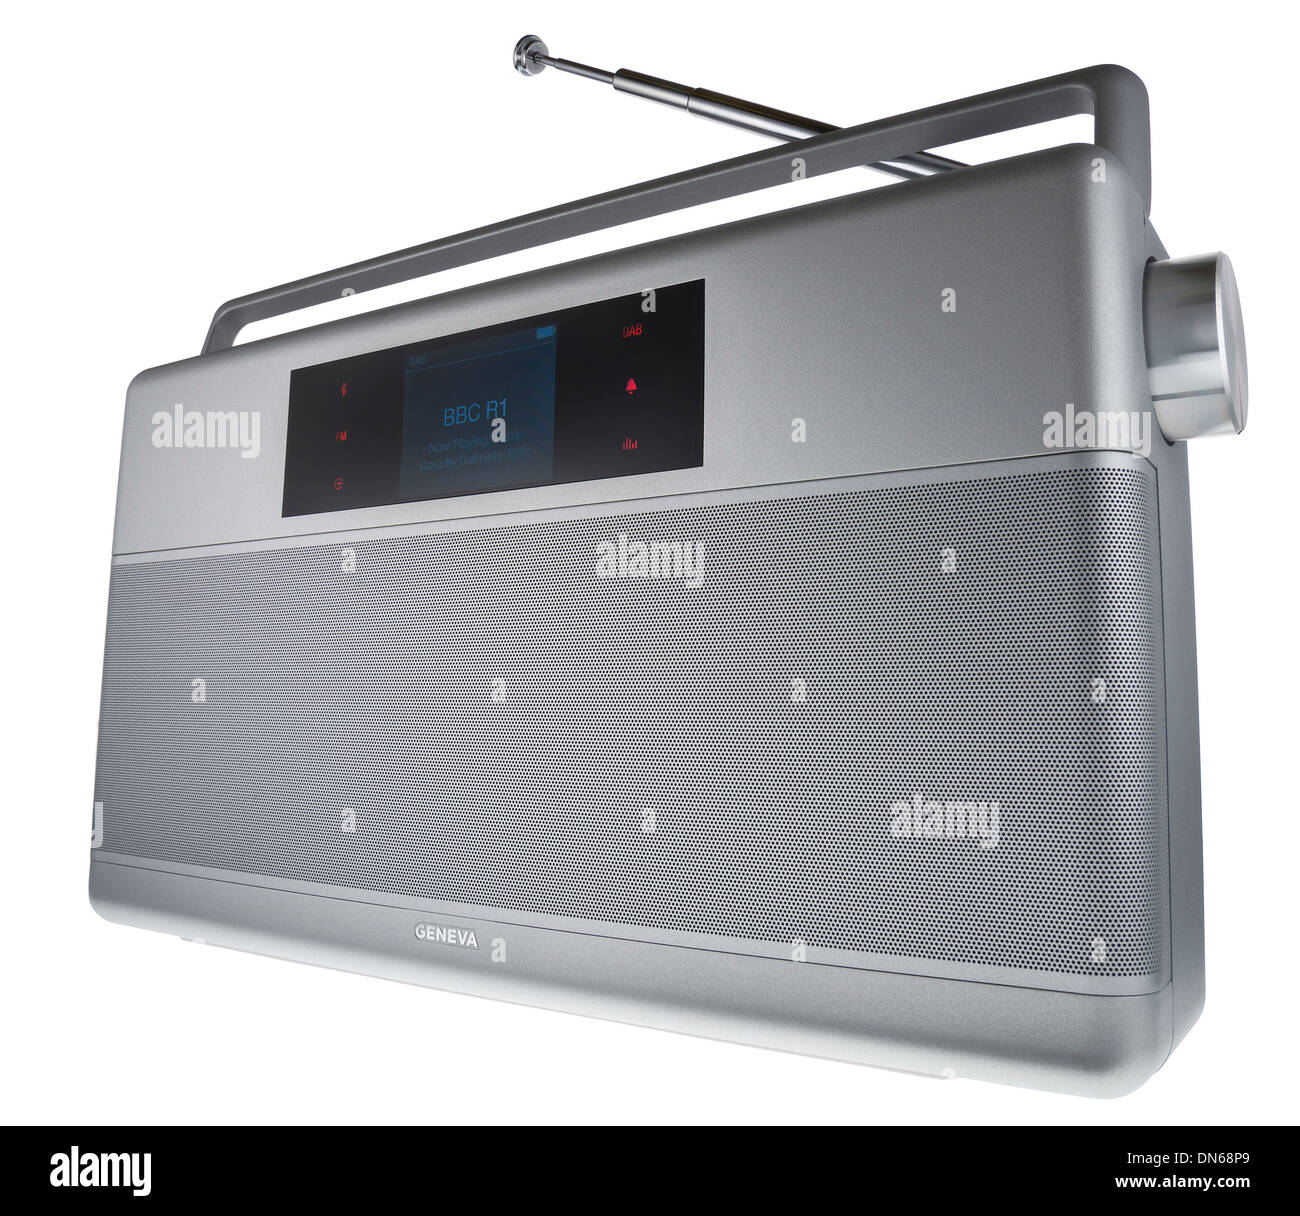 Geneva Sound Systems portable world radio Stock Photo - Alamy